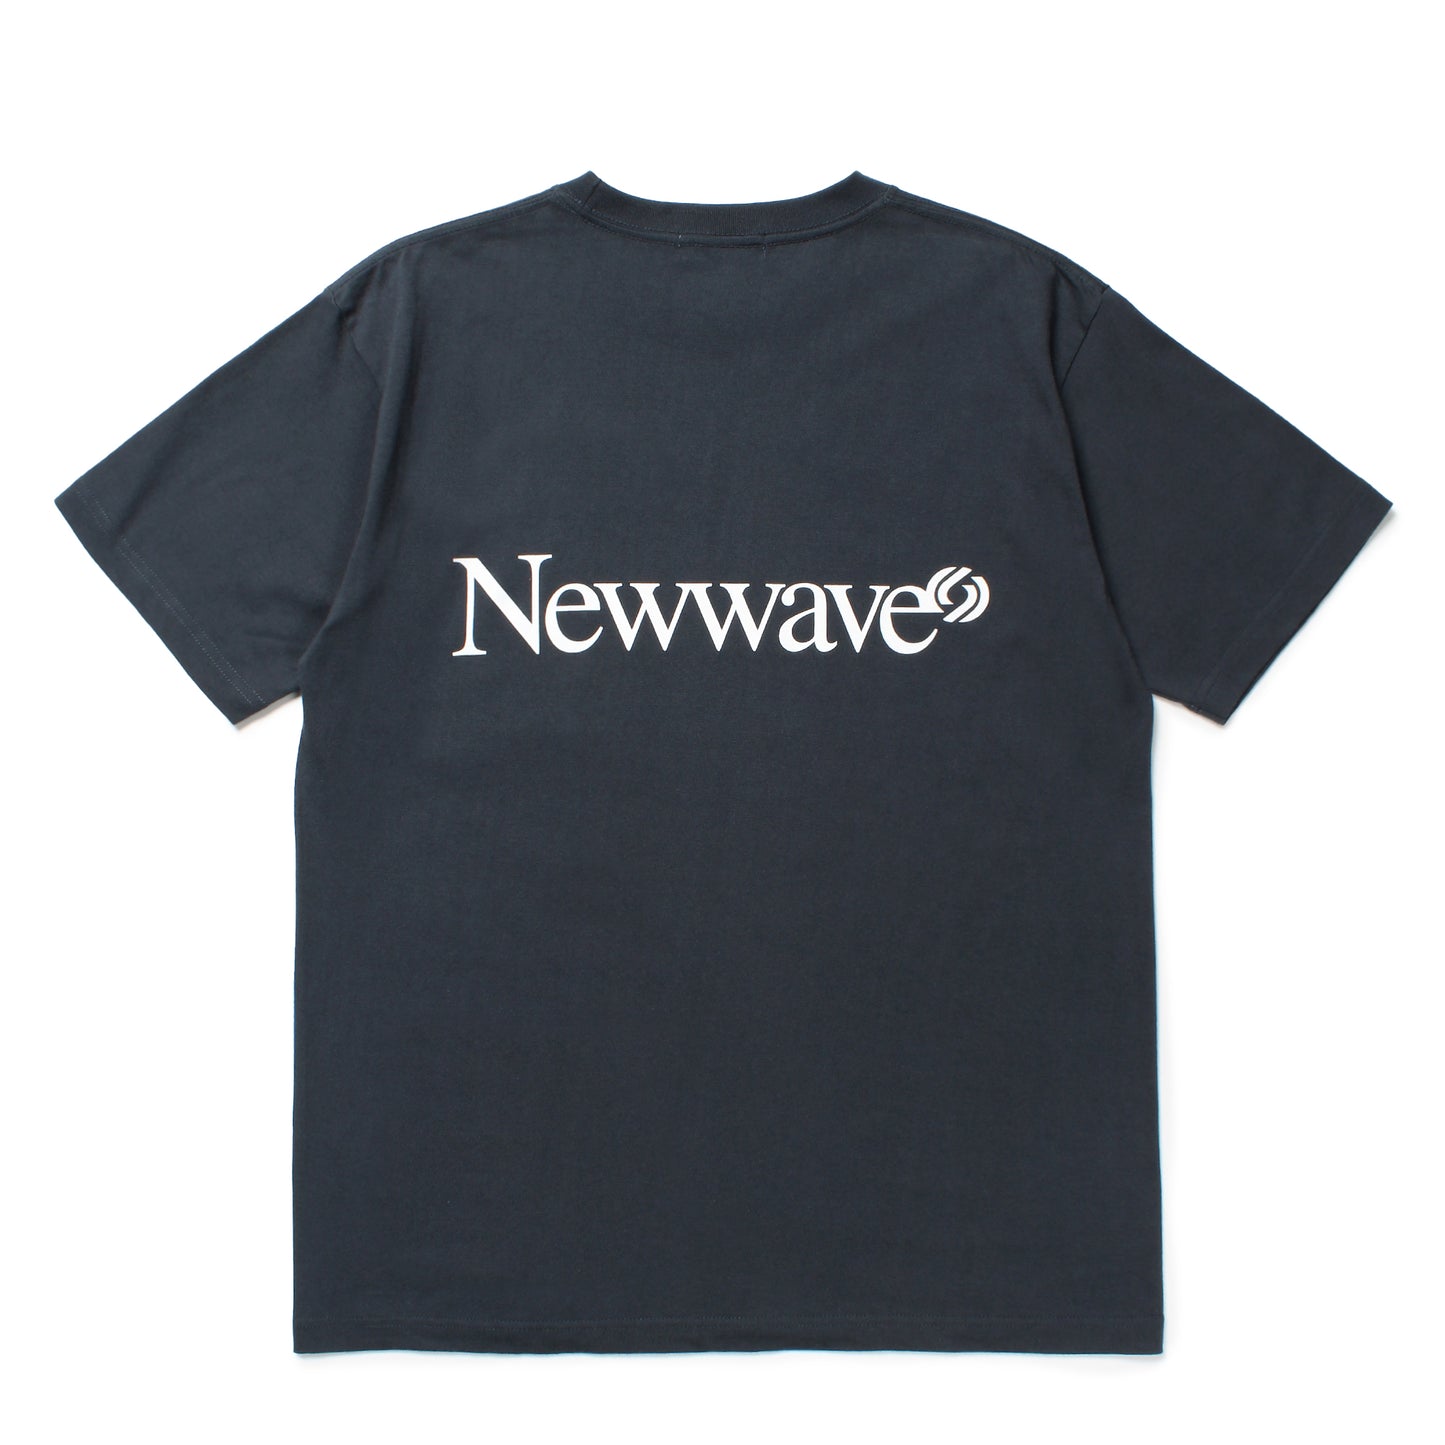 POVAL/Newwave Tee (Navy)